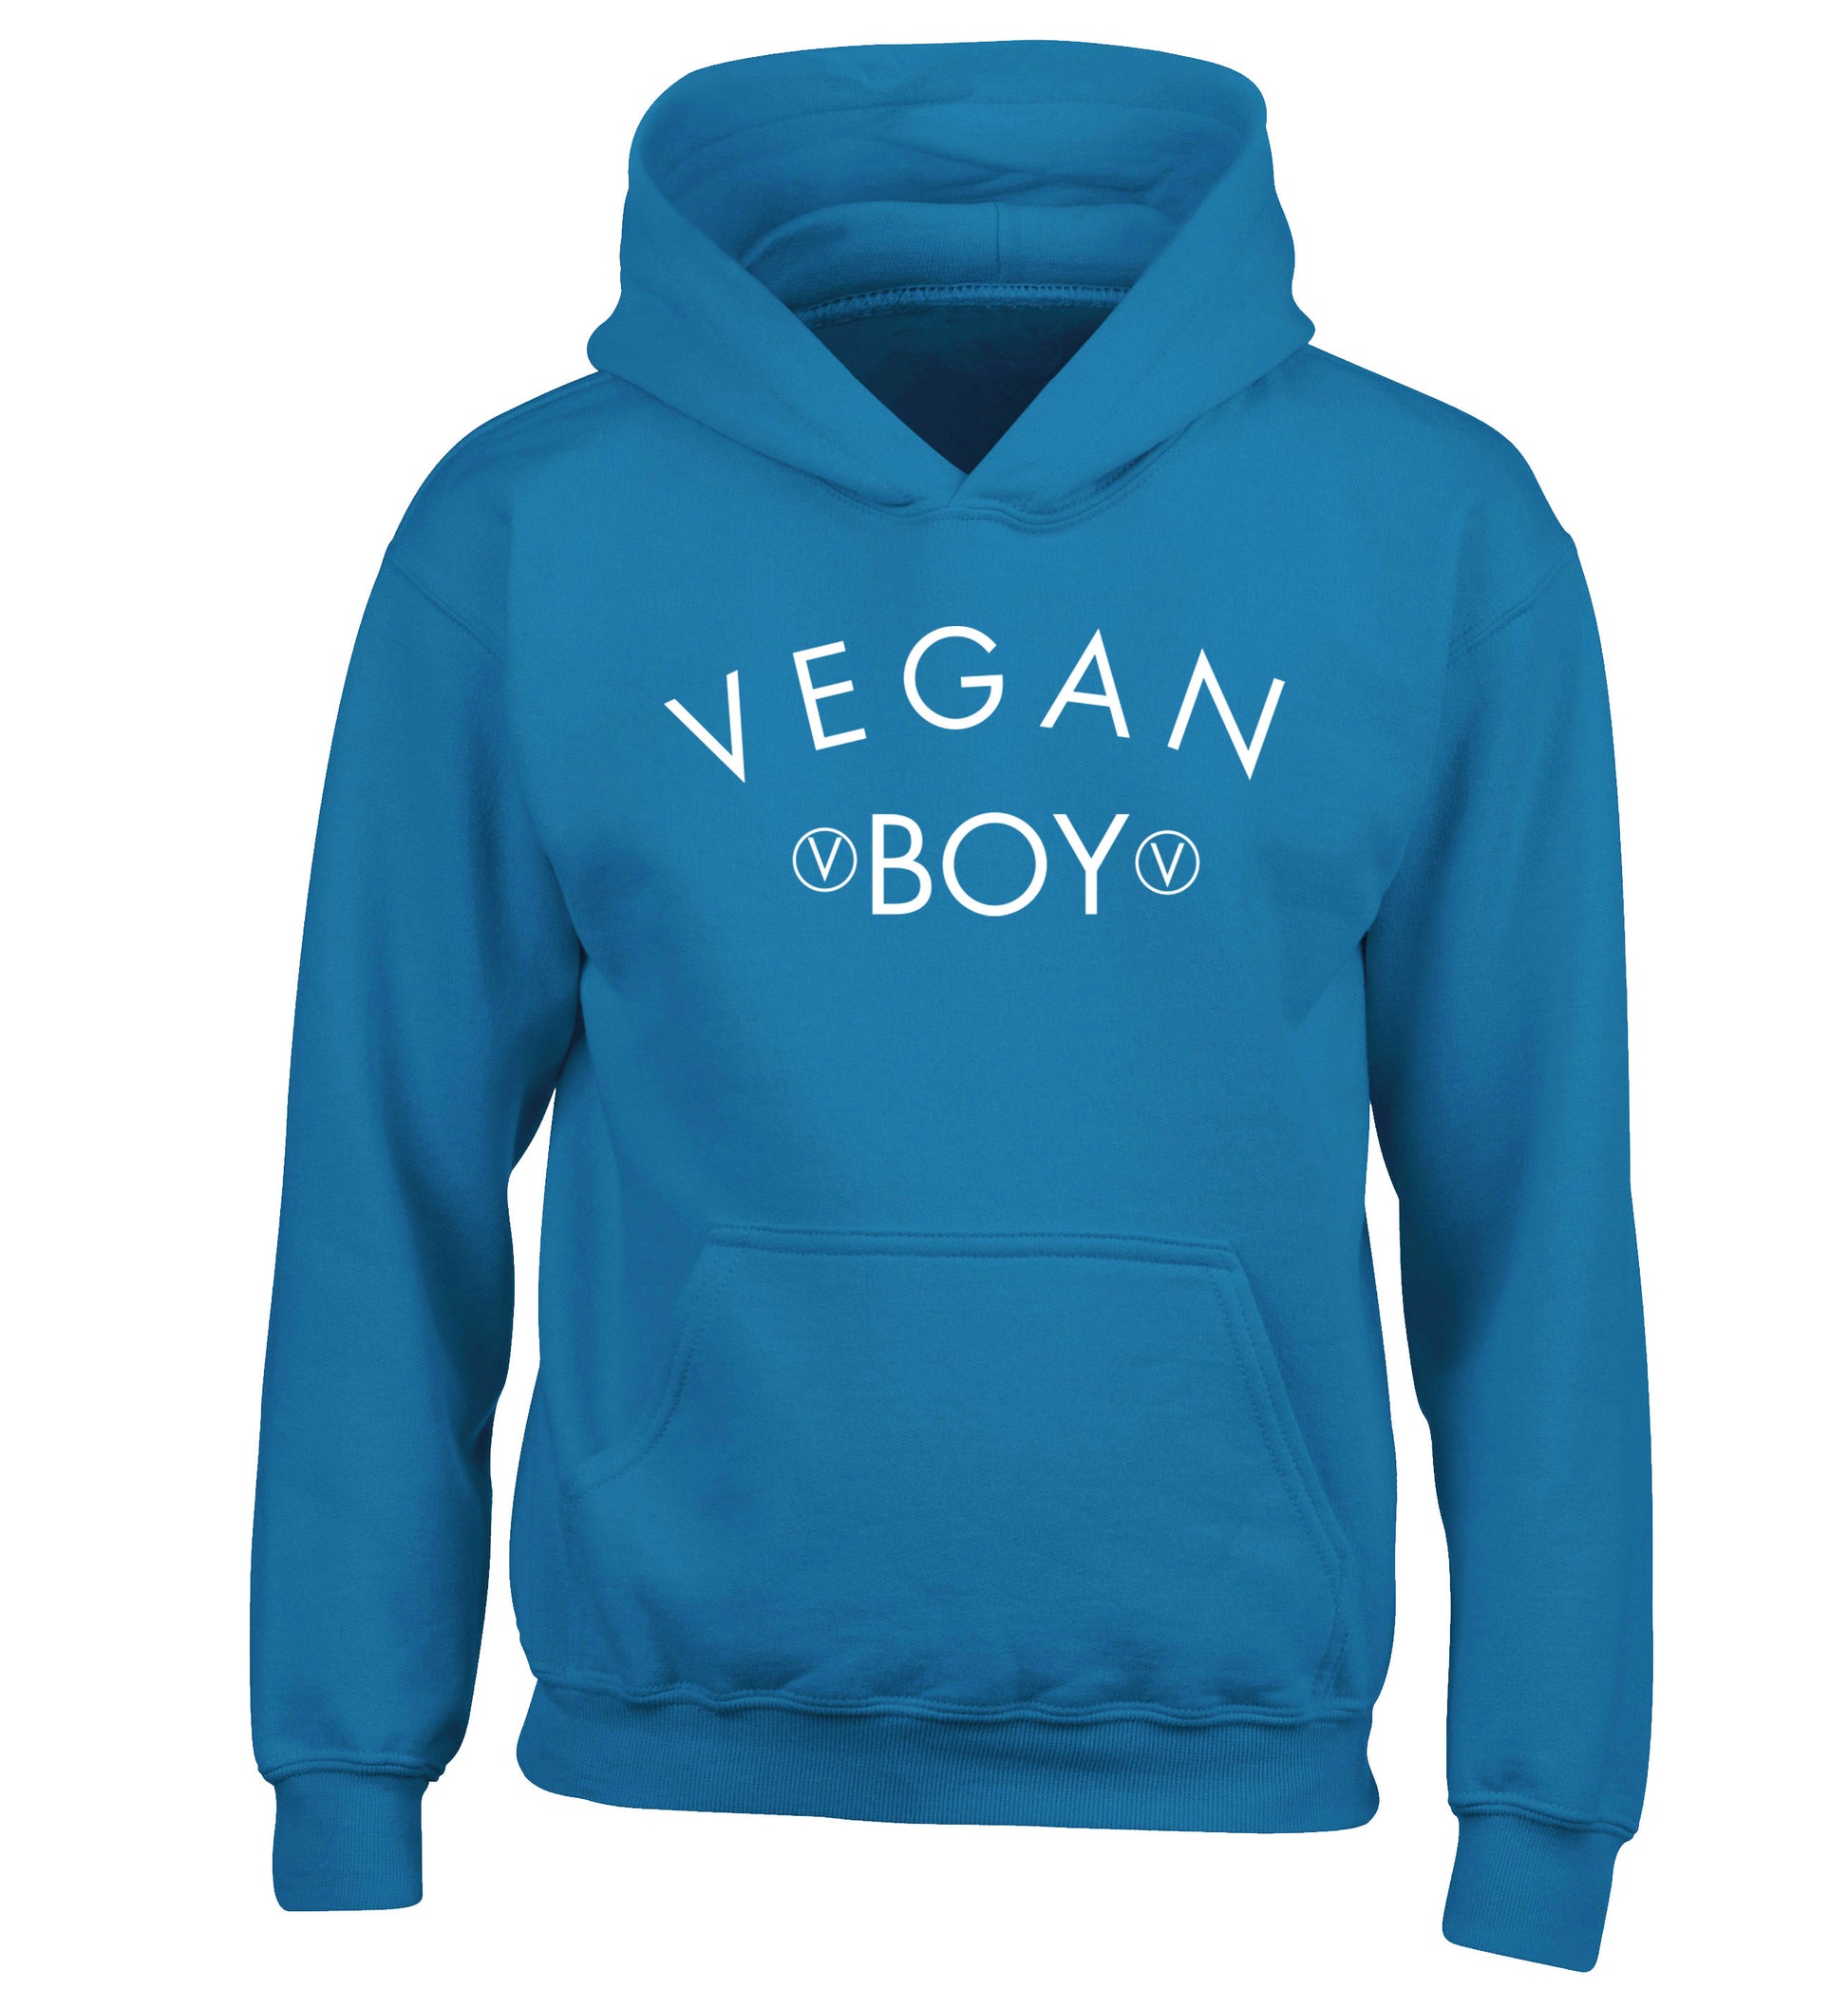 Vegan boy children's blue hoodie 12-14 Years